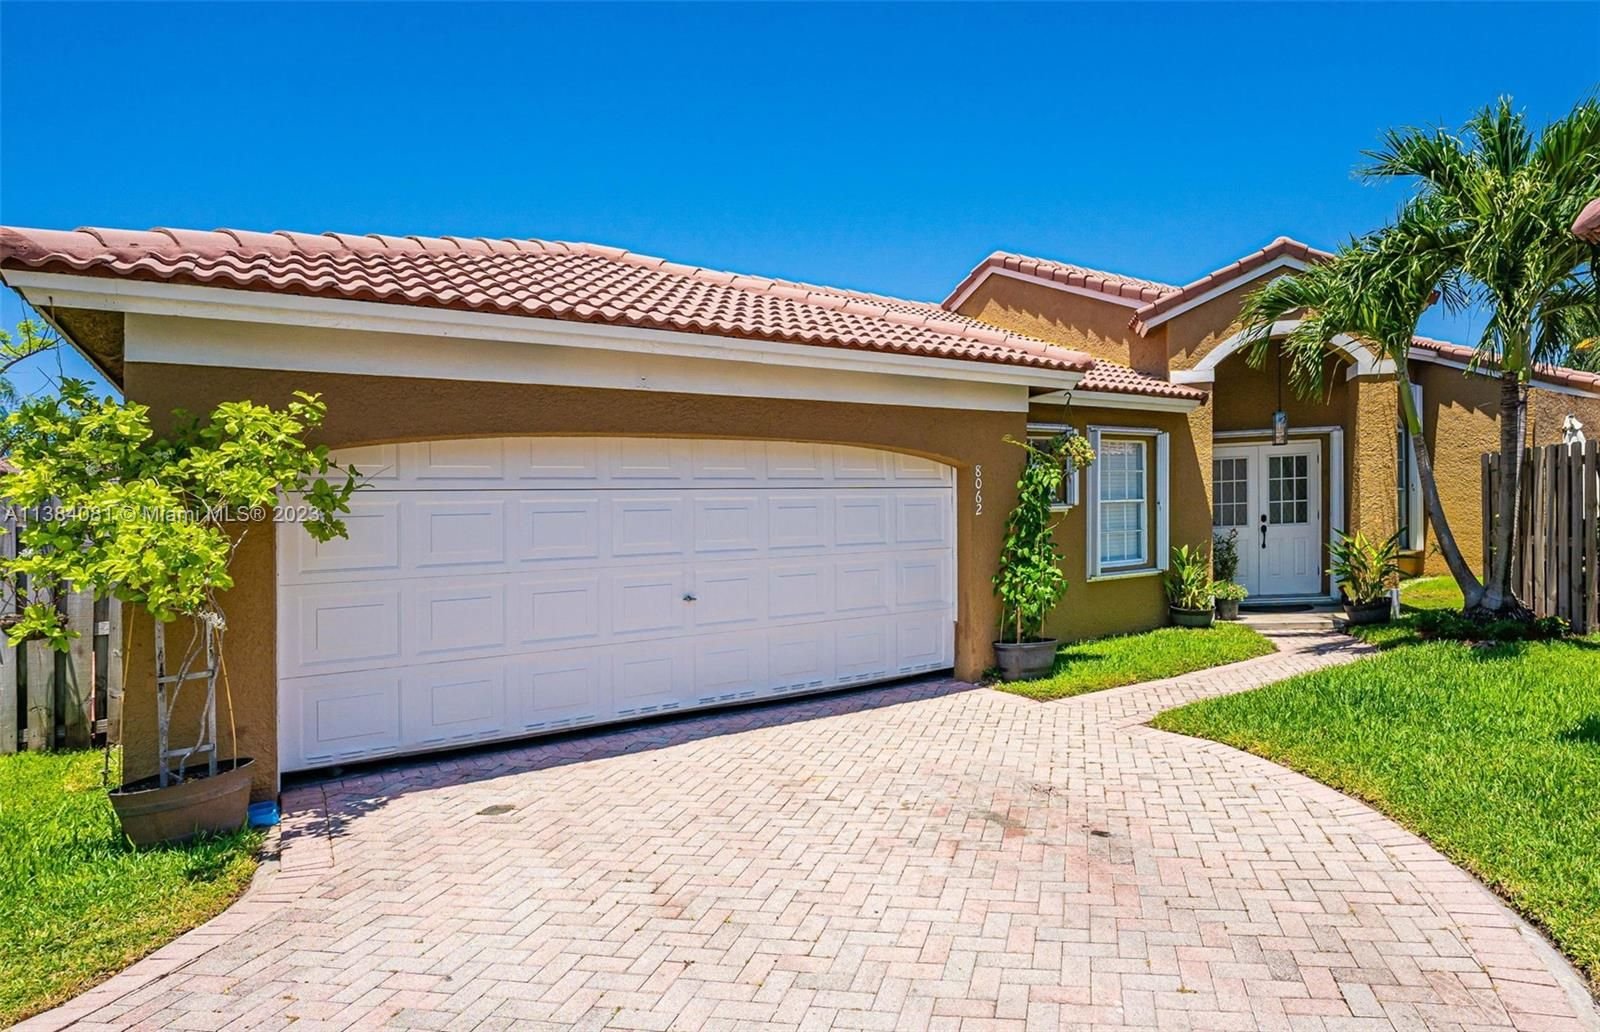 Real estate property located at 8062 158th Ave, Miami-Dade County, Miami, FL